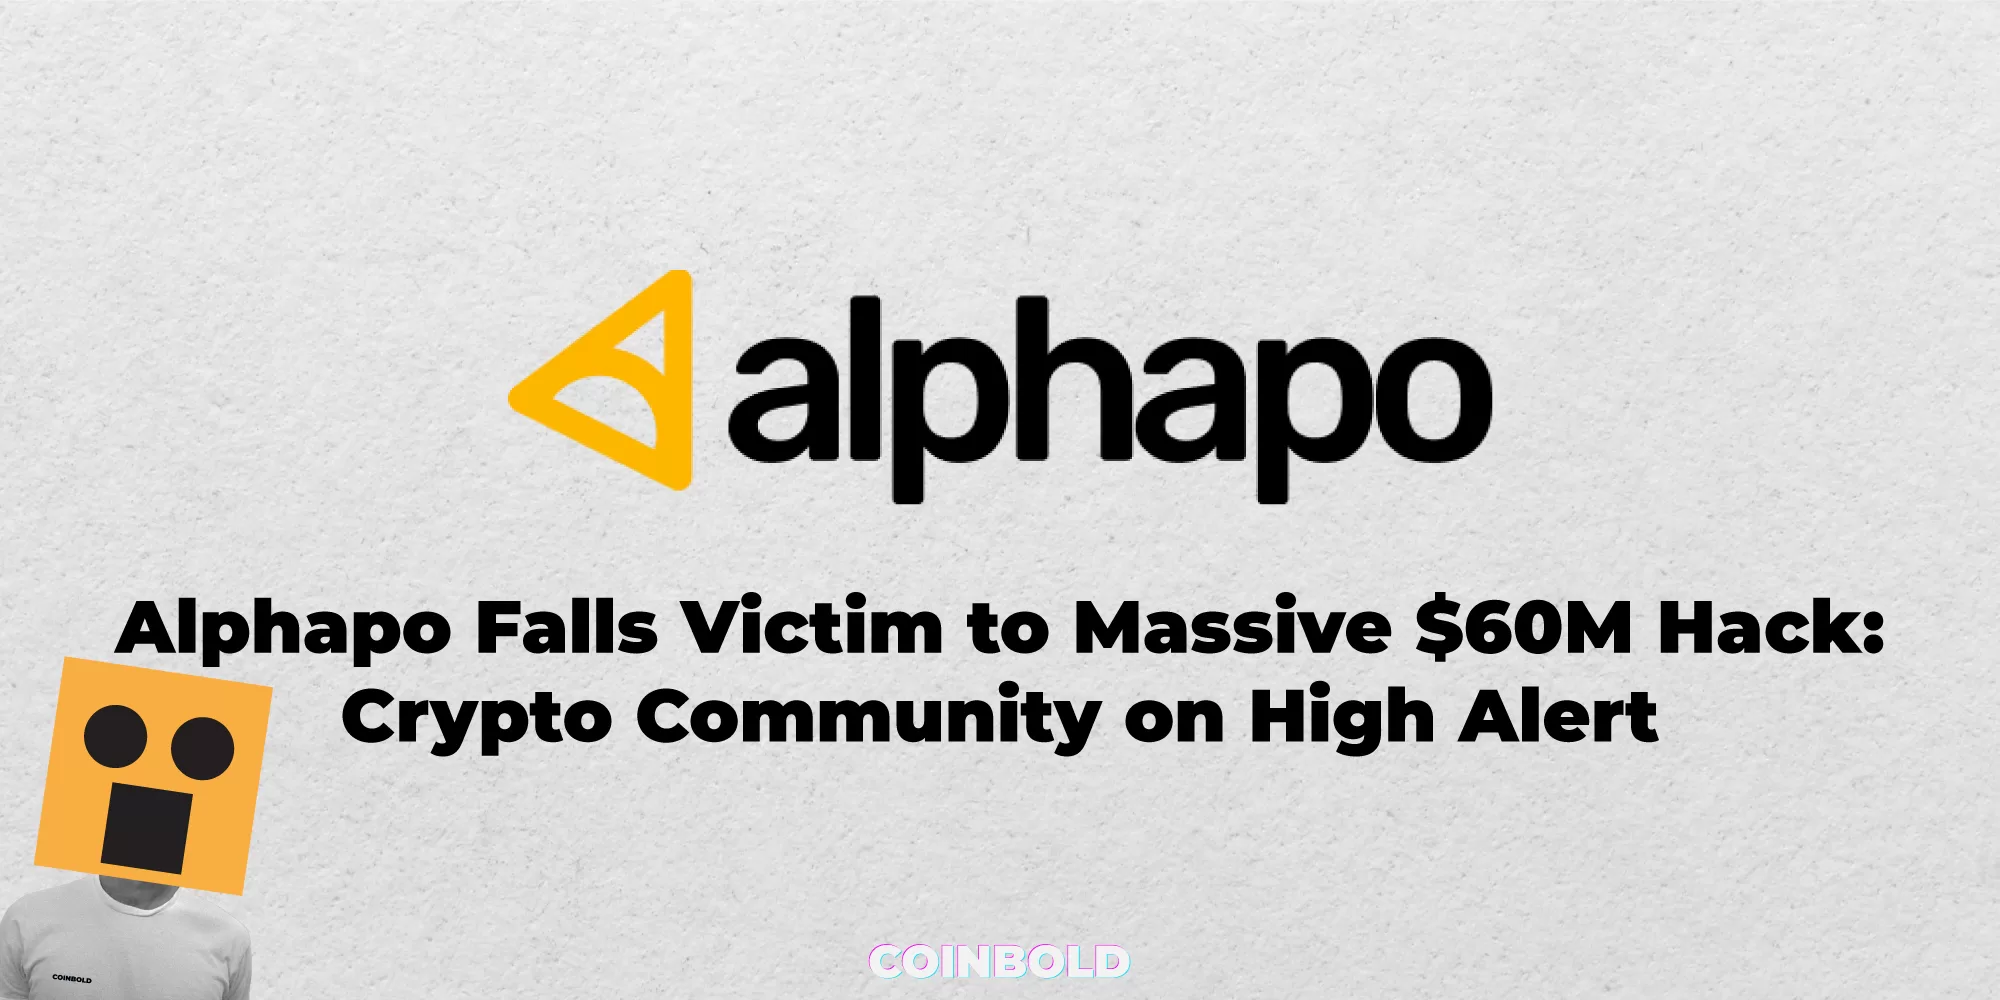 Alphapo Falls Victim to Massive $60M Hack: Crypto Community on High Alert